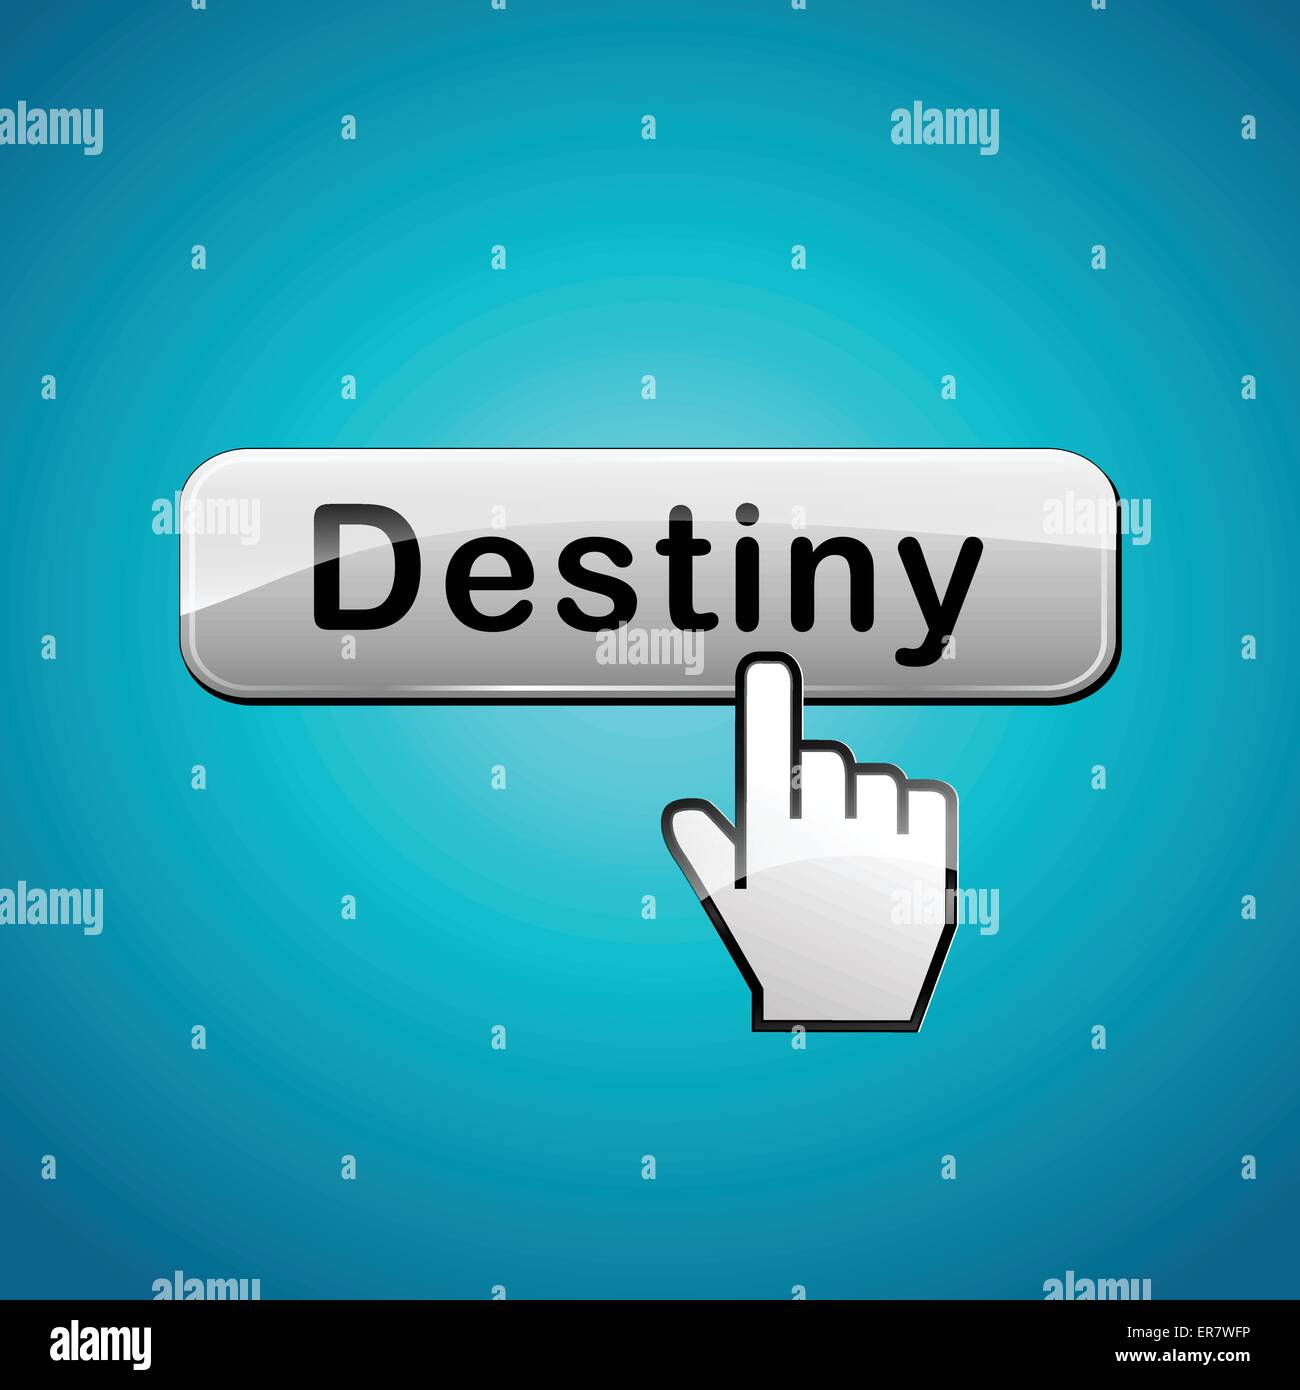 Vector illustration of destiny web button concept Stock Vector